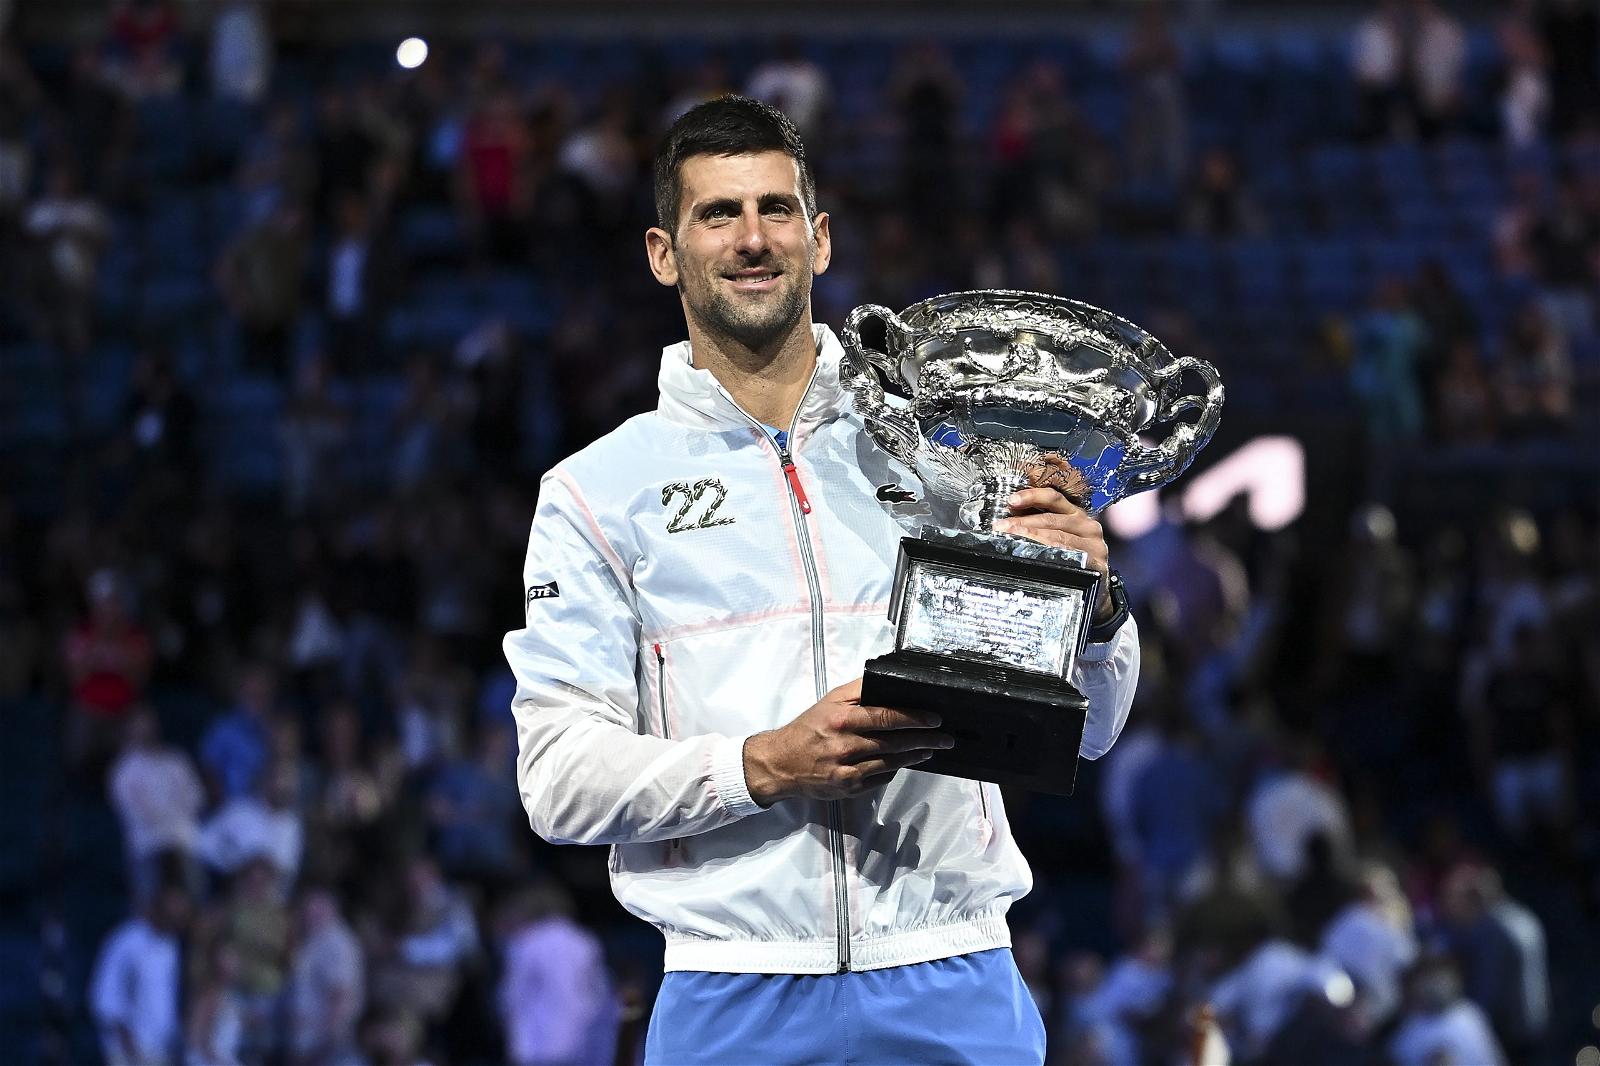 Novak Djokovic wins his first match of 2022 at Dubai Championship, making  return after Australian Open visa saga - ABC News